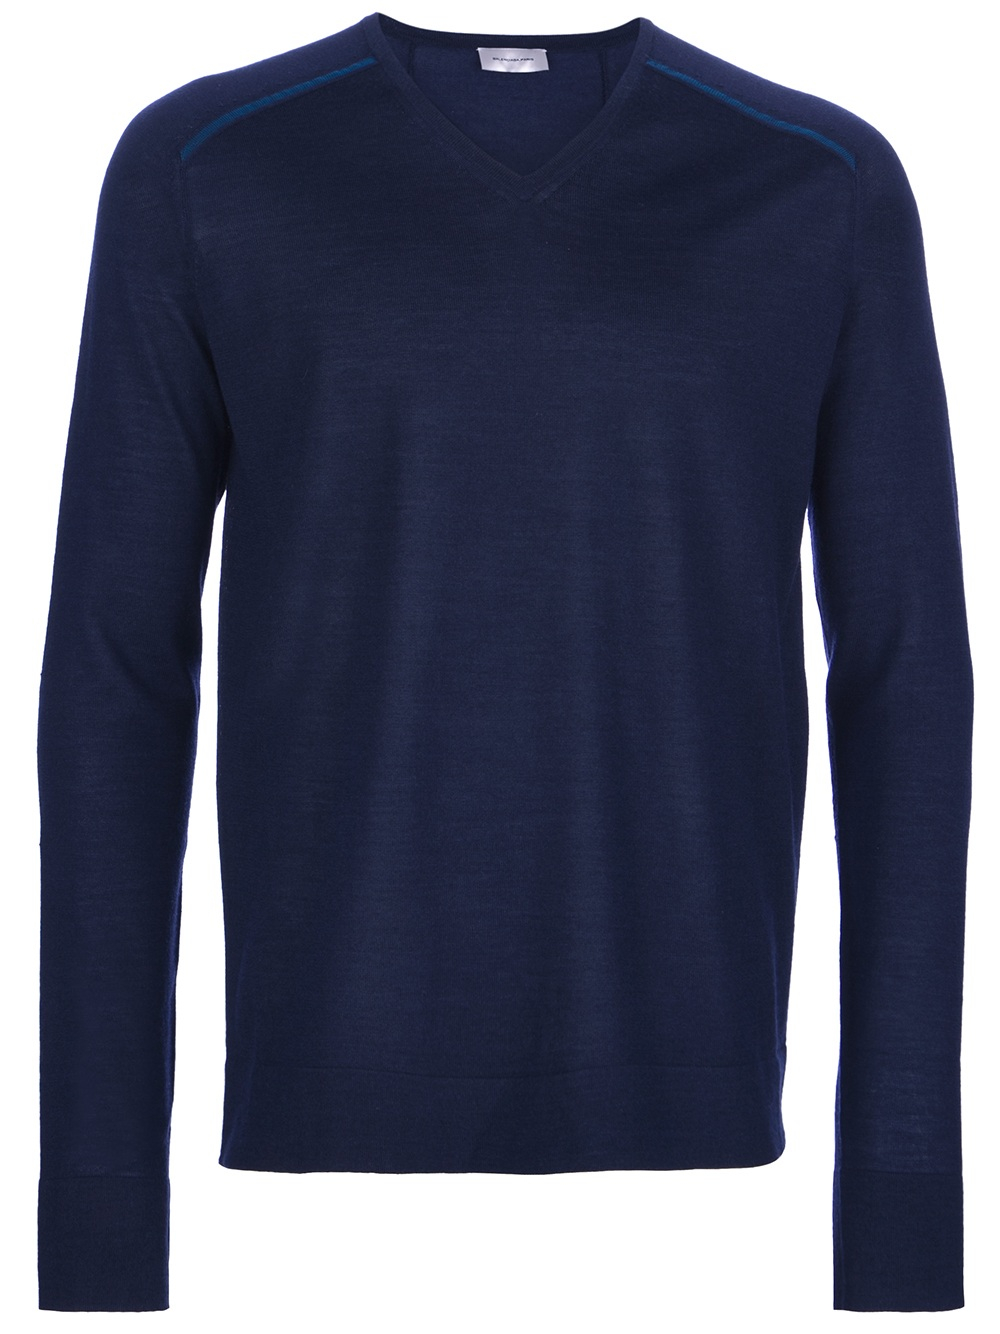 Lyst - Balenciaga Vneck Sweater in Blue for Men